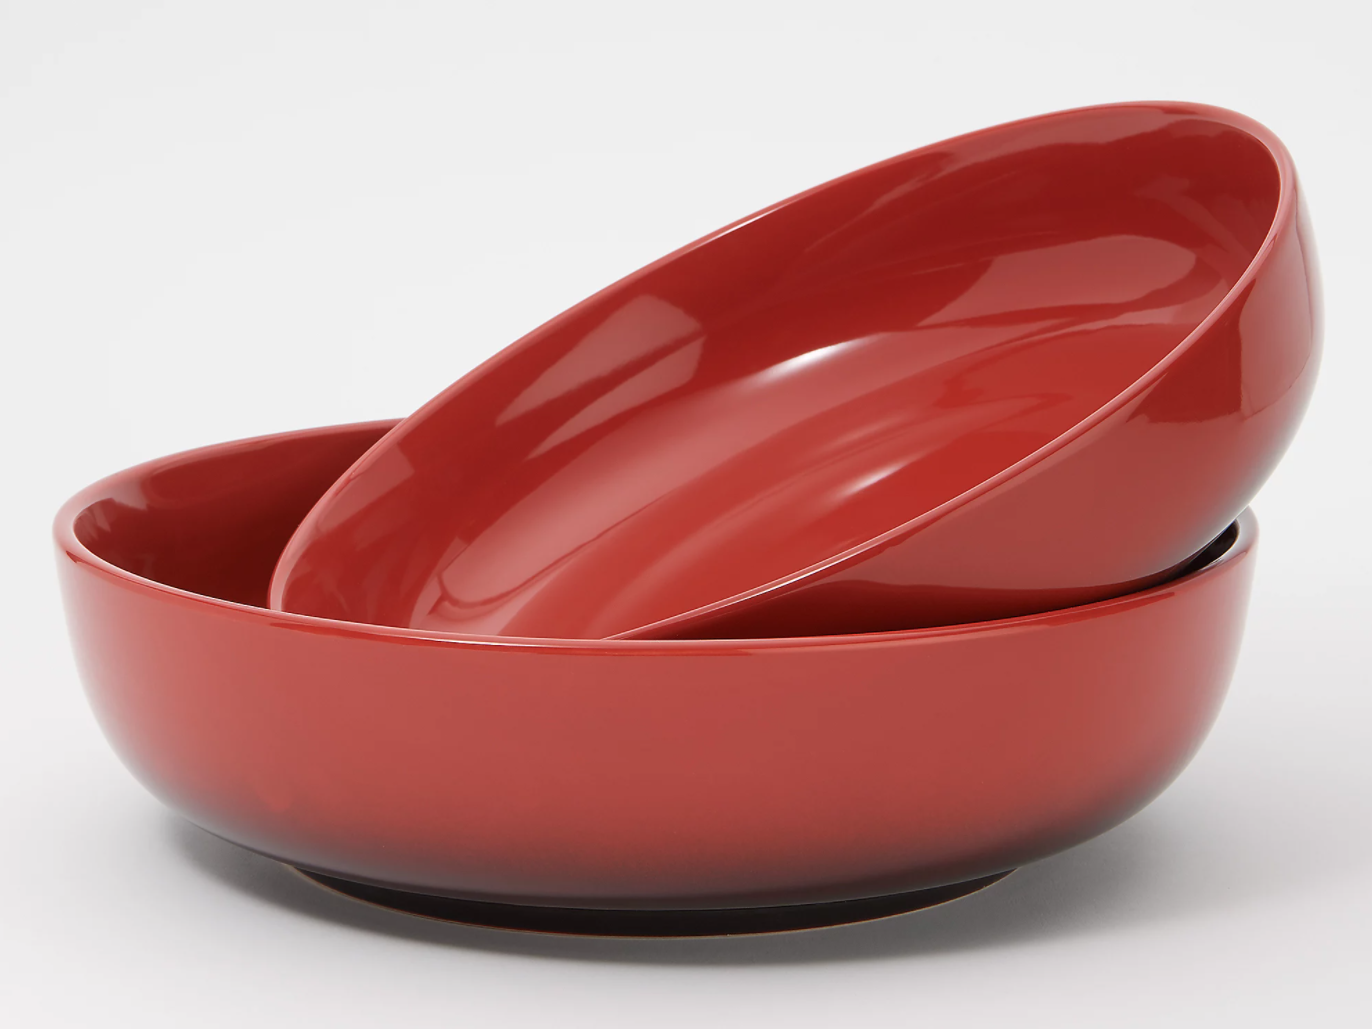 Temp-tations bowls